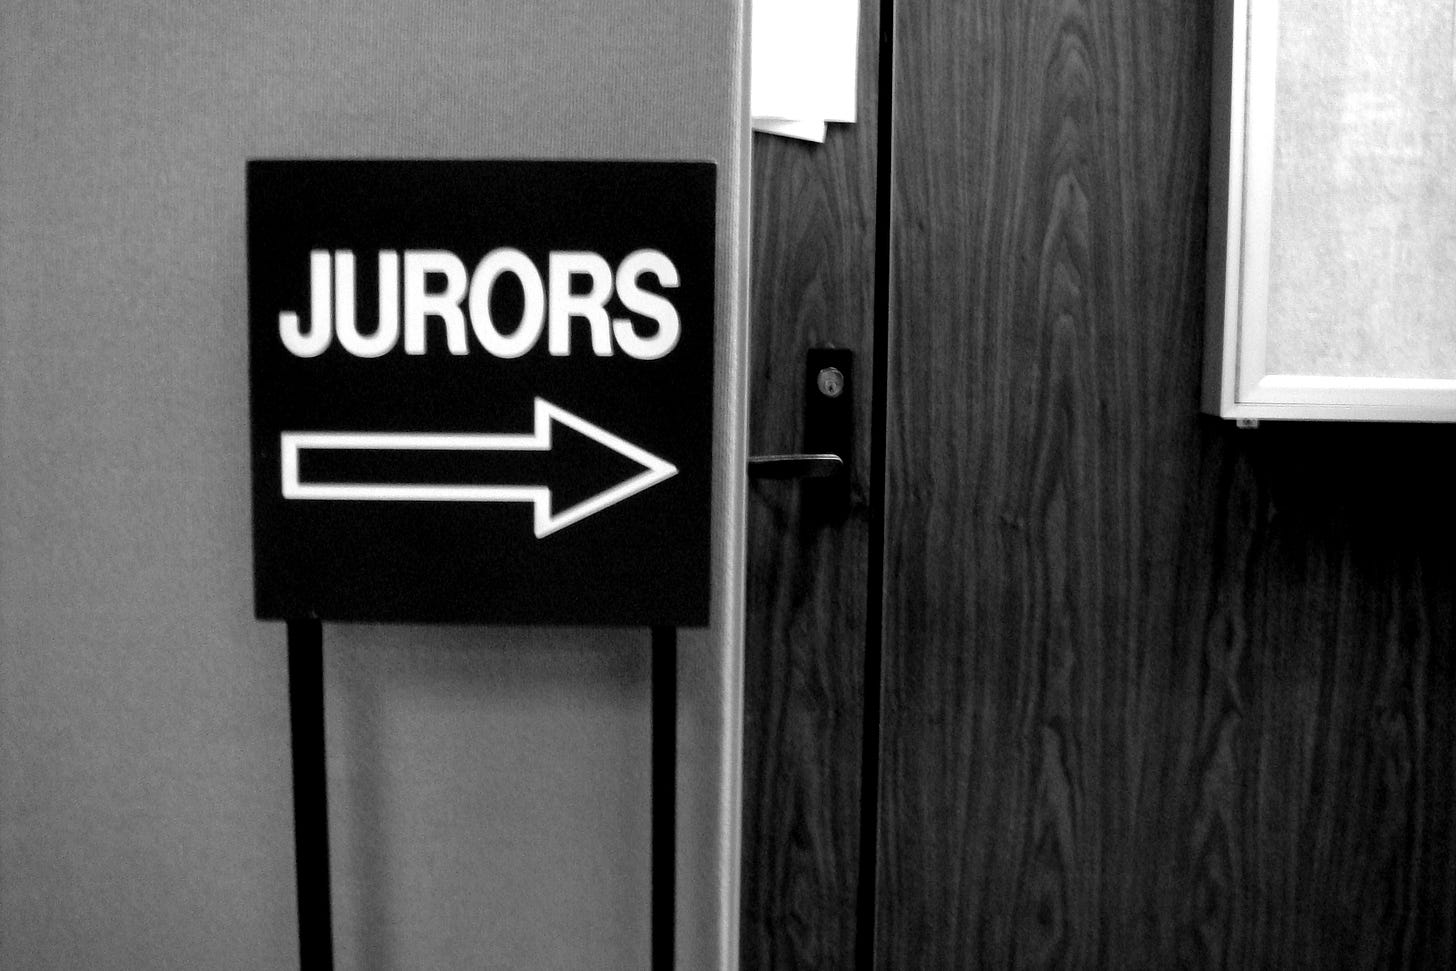 "Jurors" sign with arrow toward door